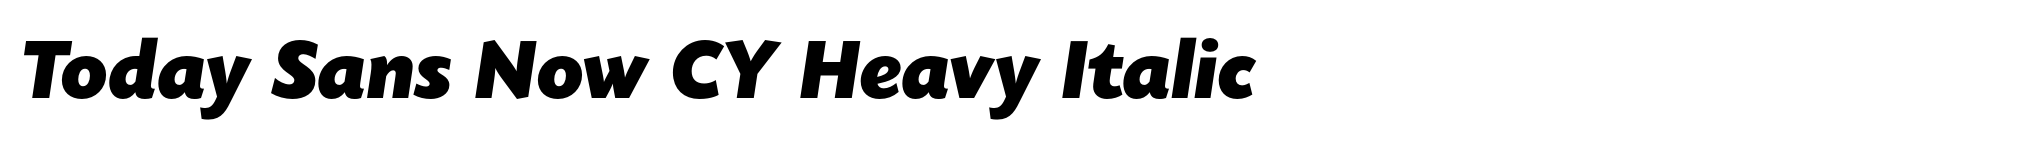 Today Sans Now CY Heavy Italic image